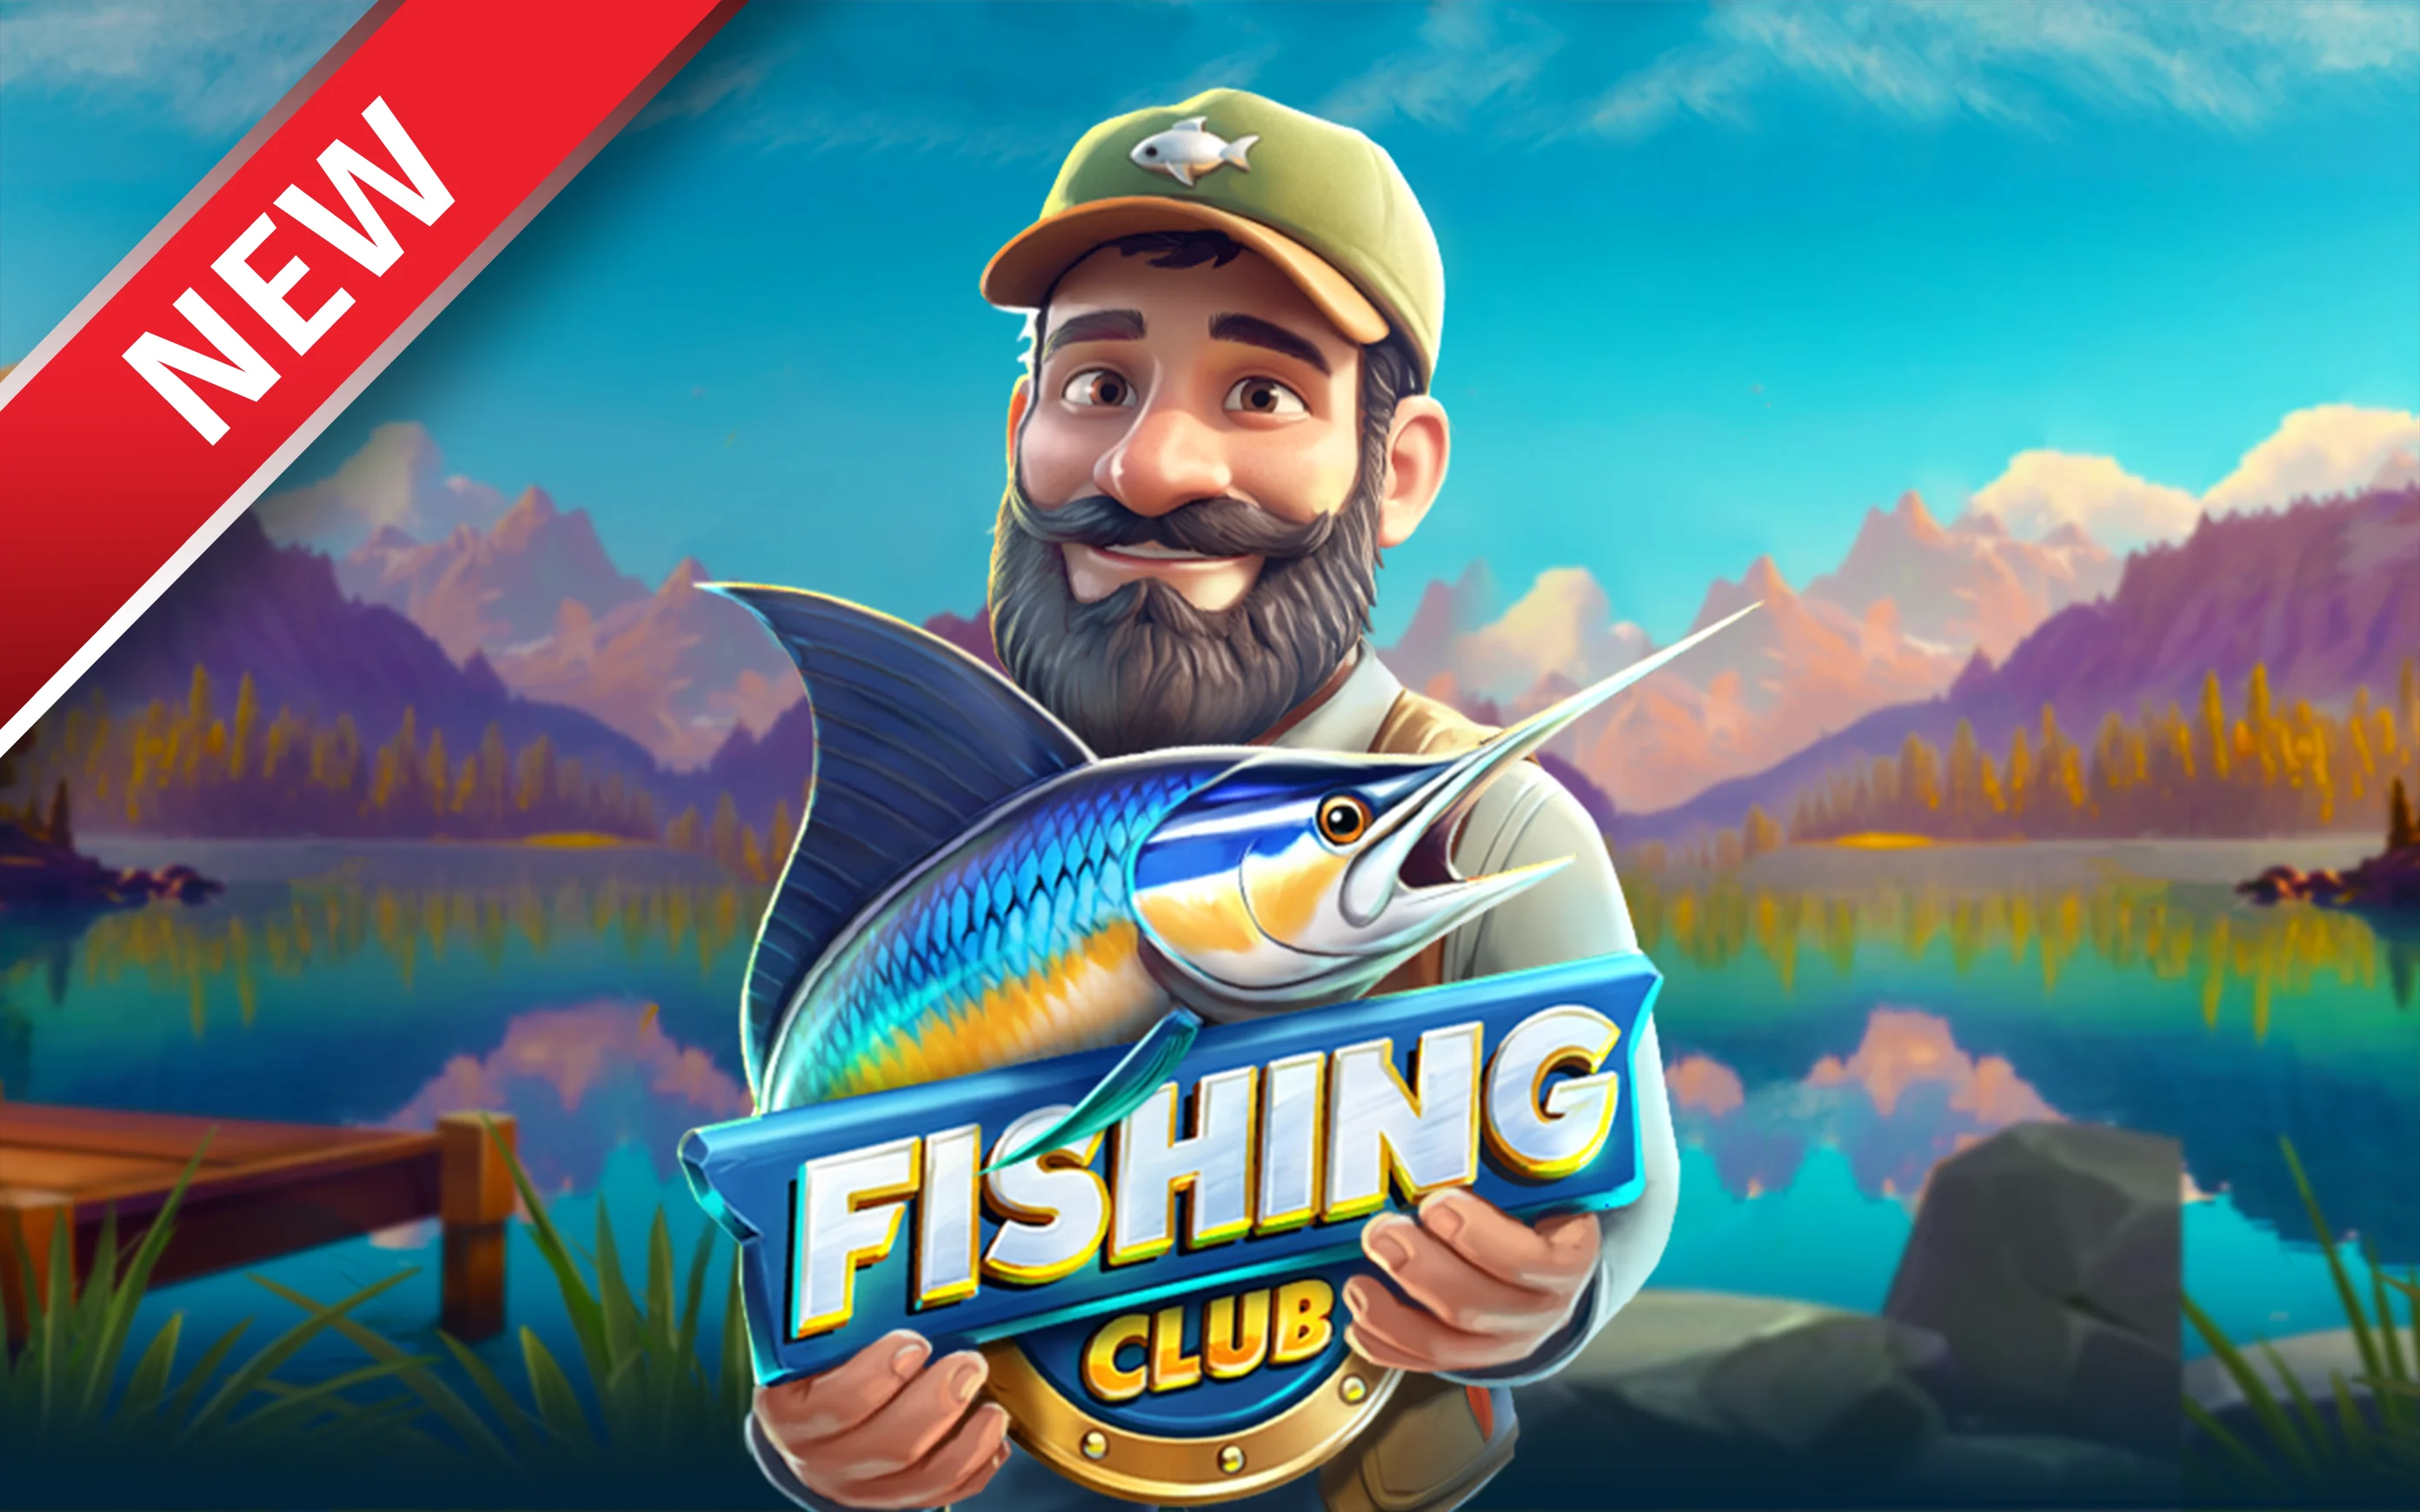 Spil Fishing Club på Starcasino.be online kasino
